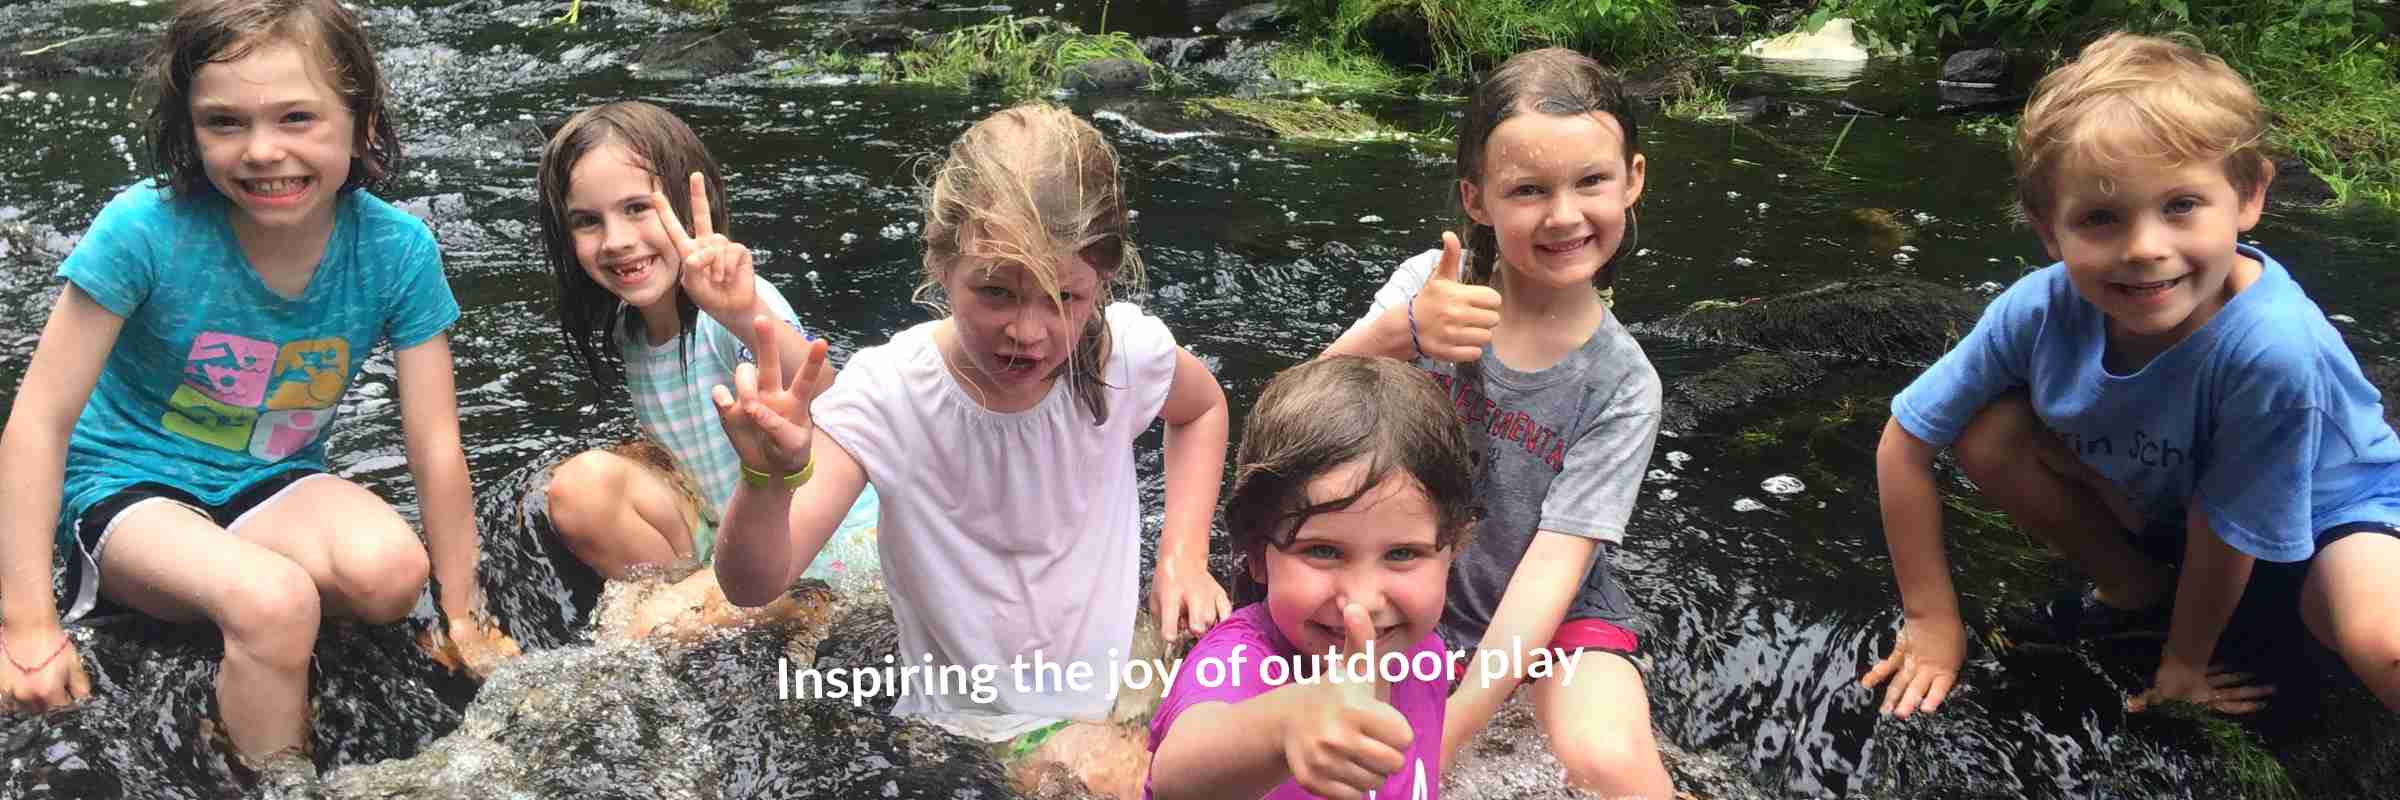 3 Inspiring the joy of outdoor play